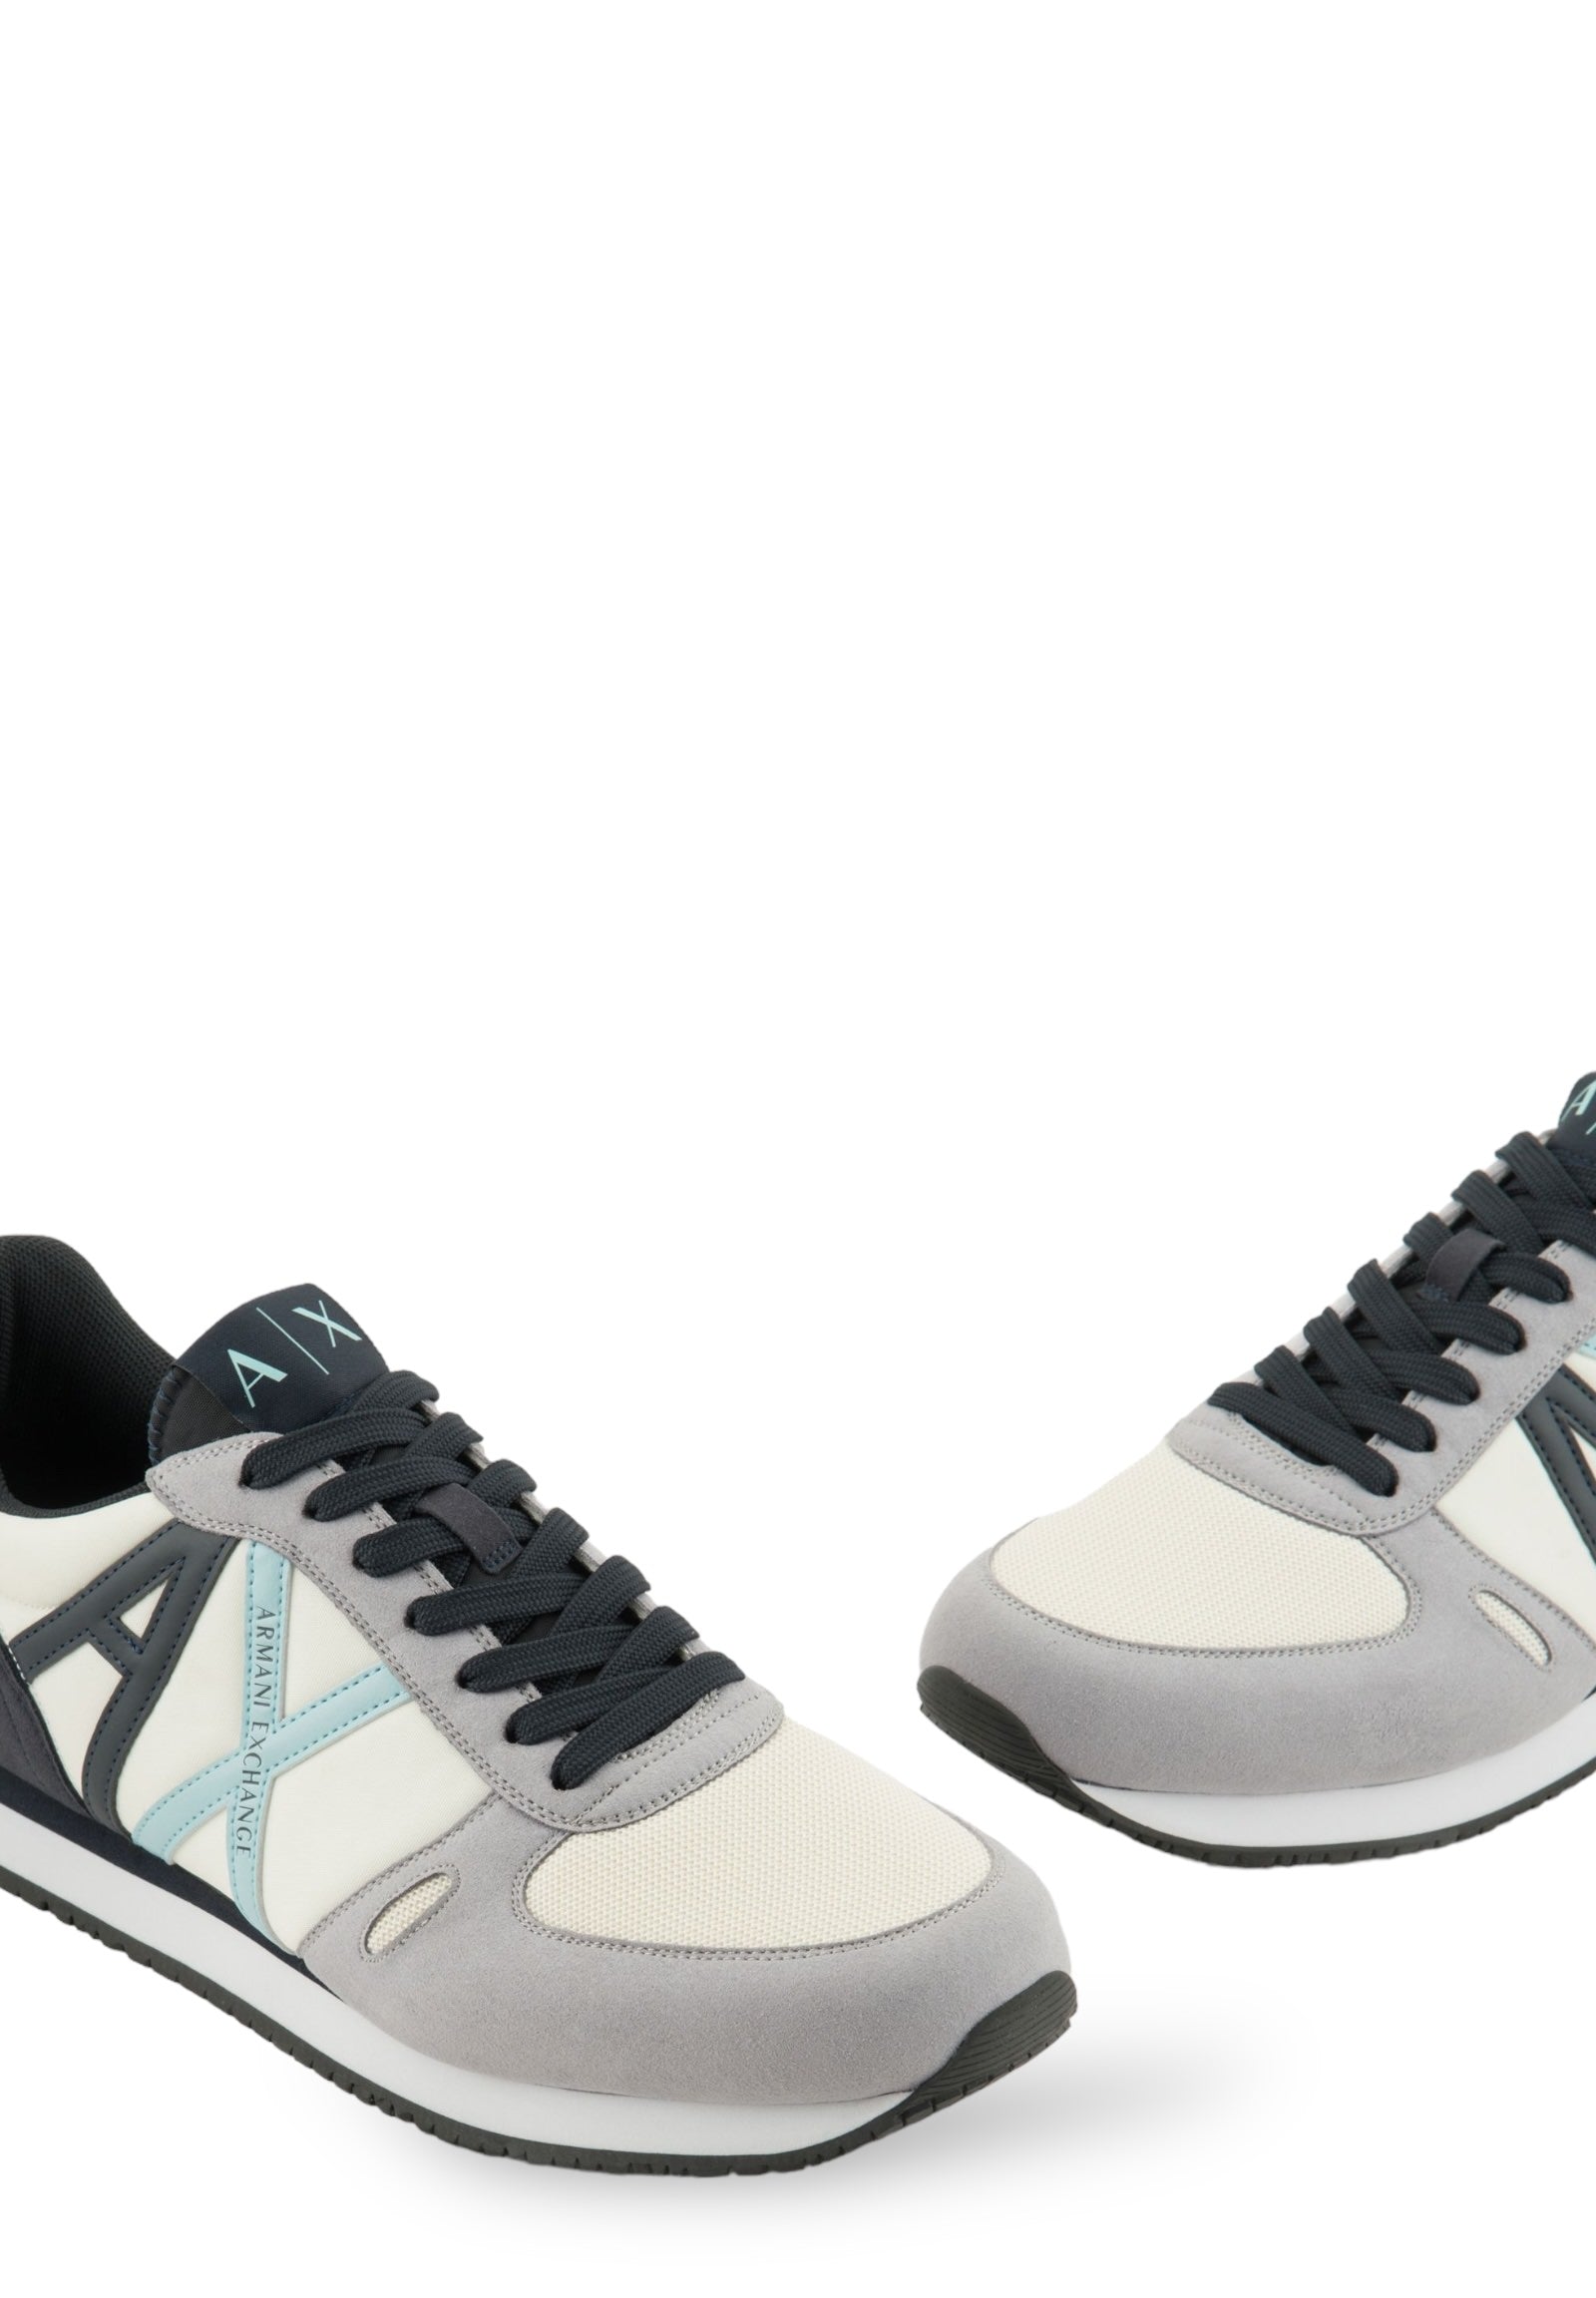 Sneakers Xux017 NavY-Optic WhitE-Grey